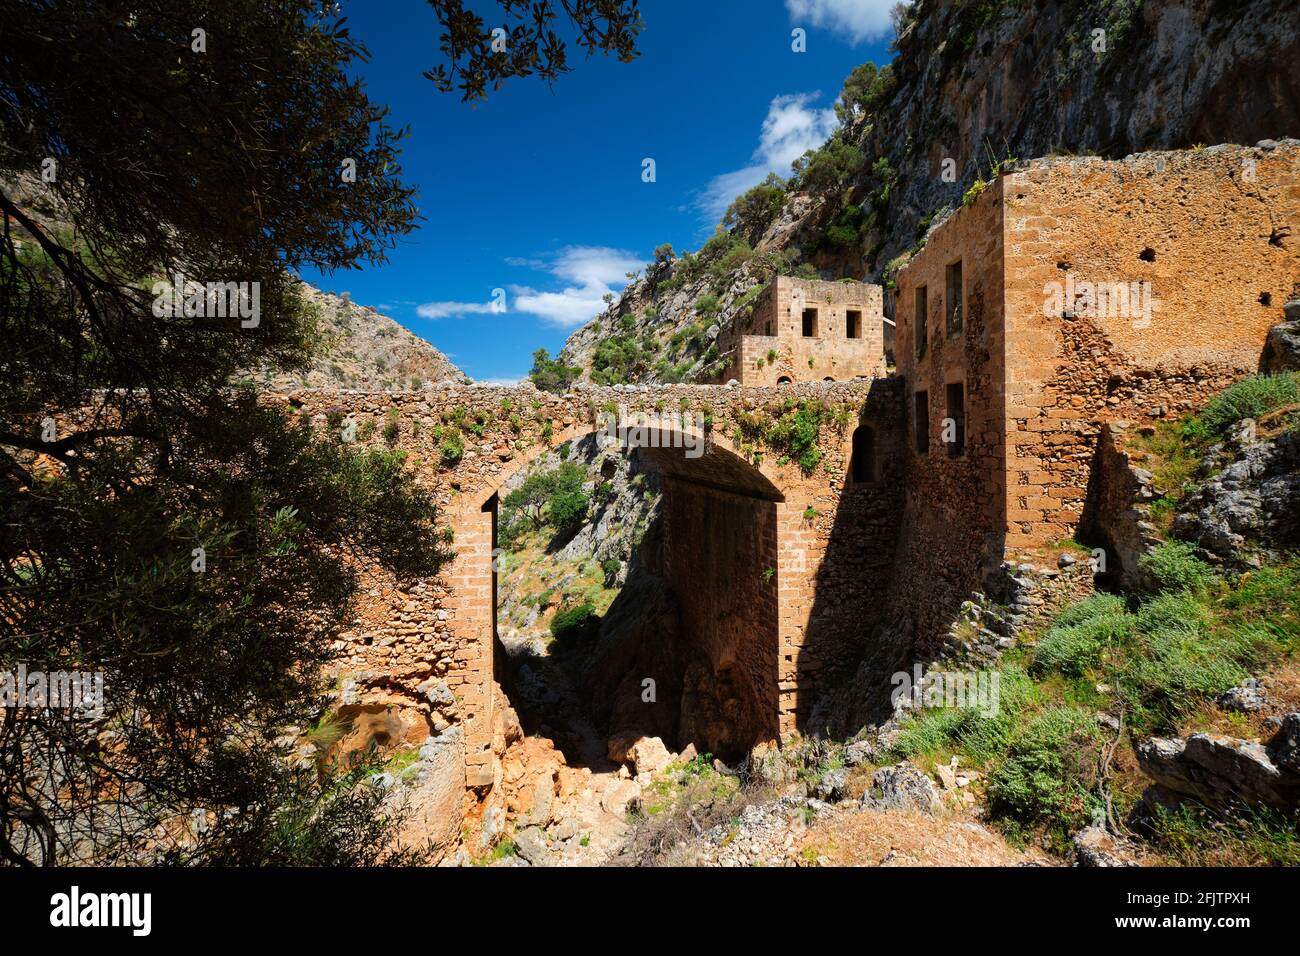 Riuns of Katholiko monastery, Chania region on Crete island, Greece Stock Photo